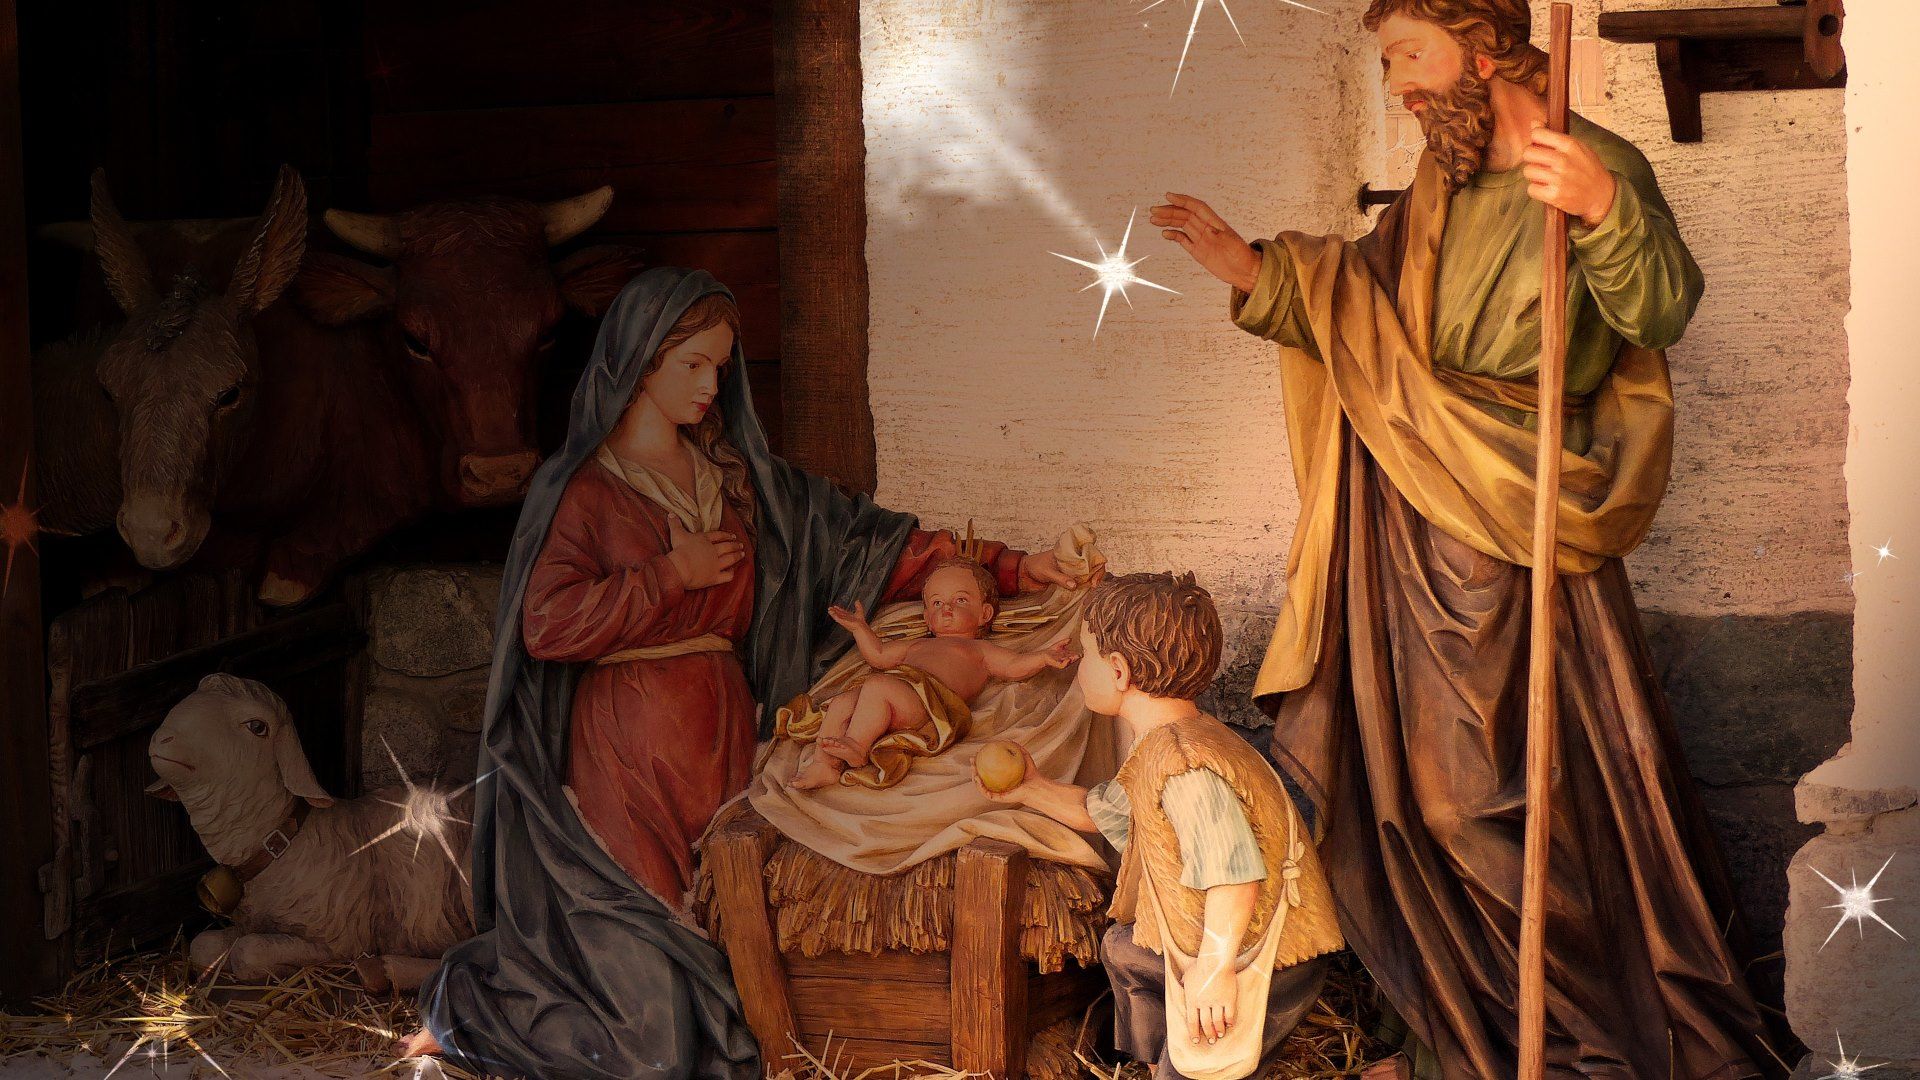 Birth of Jesus Wallpaper. Birth of Christ Wallpaper, Kingdom Hearts Birth by Sleep Wallpaper and Green Lantern Rebirth Wallpaper